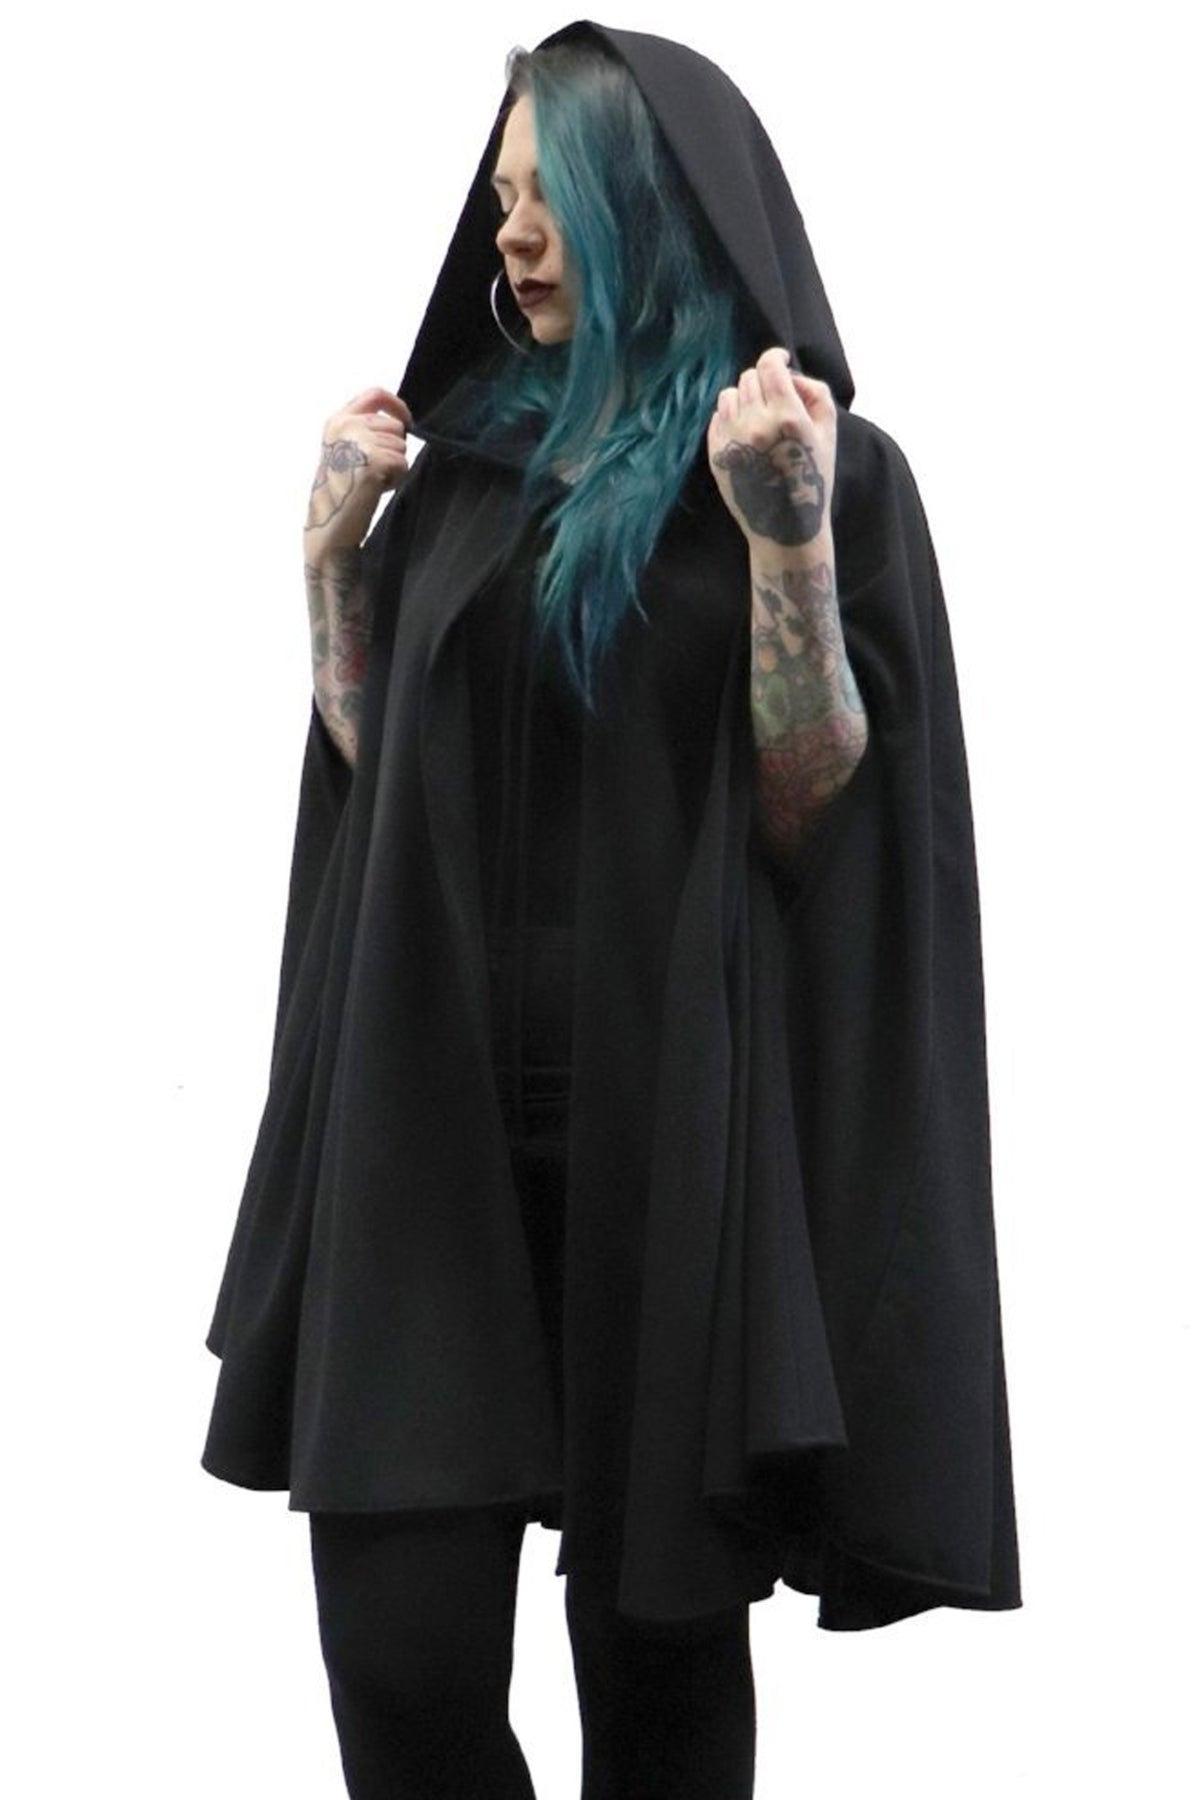 short black hooded cape 